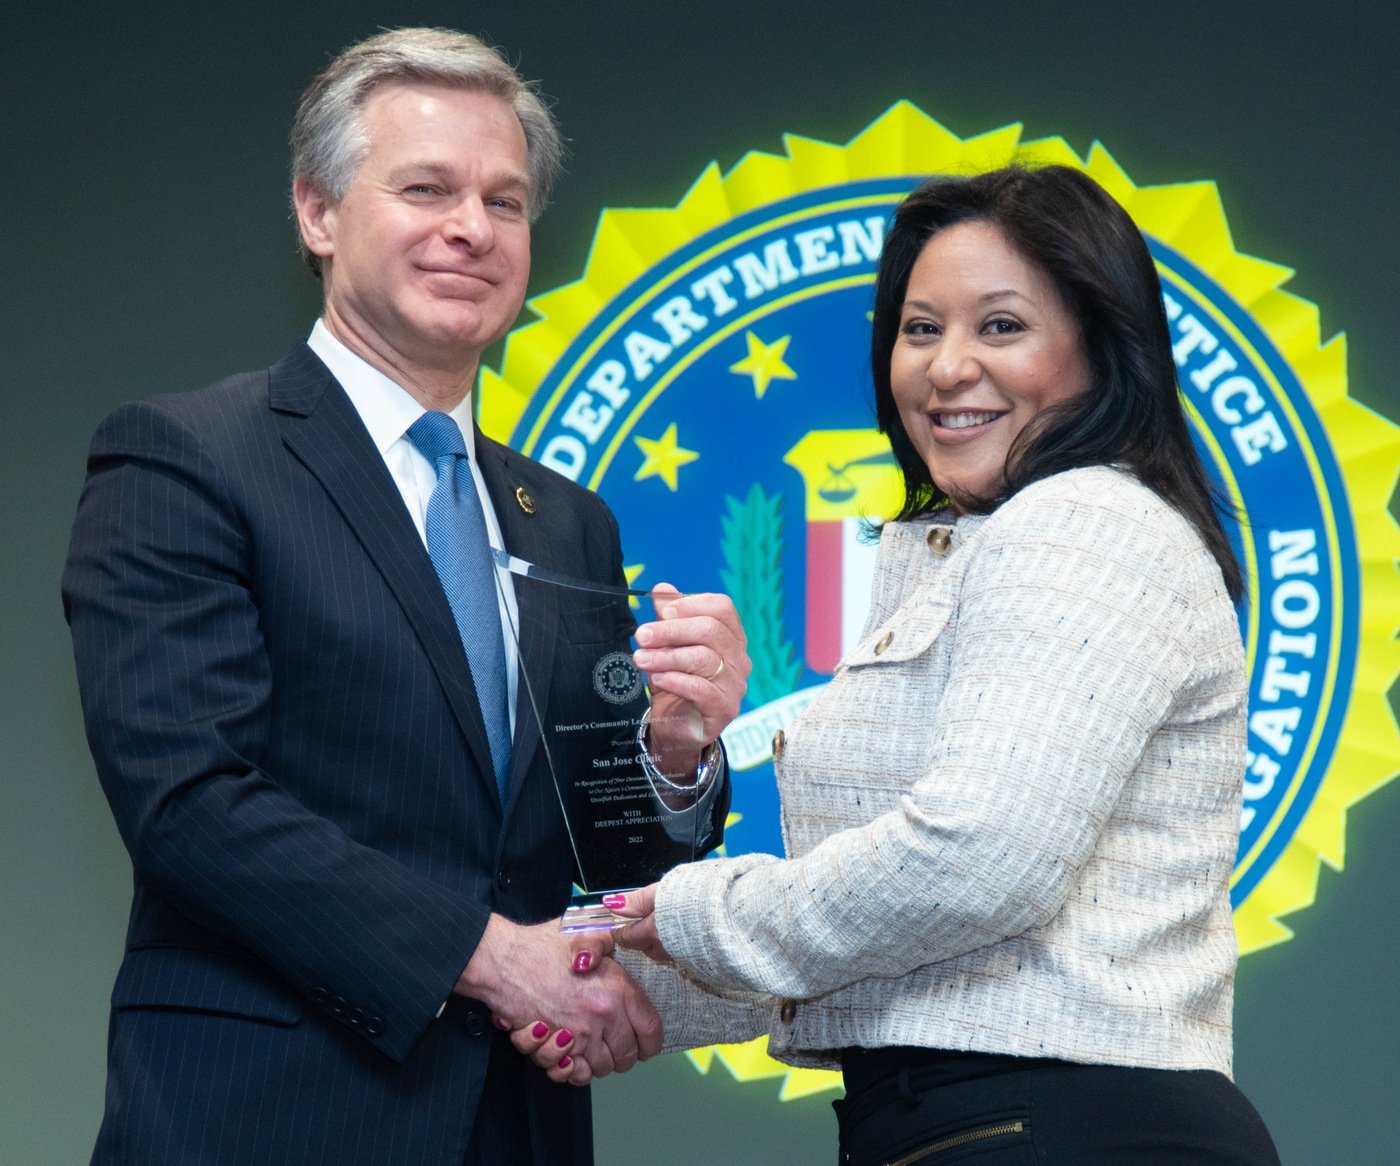 FBI Houston 2022 Director’s Community Leadership Award recipient the San Jose Clinic, represented by Lucresia Montez.